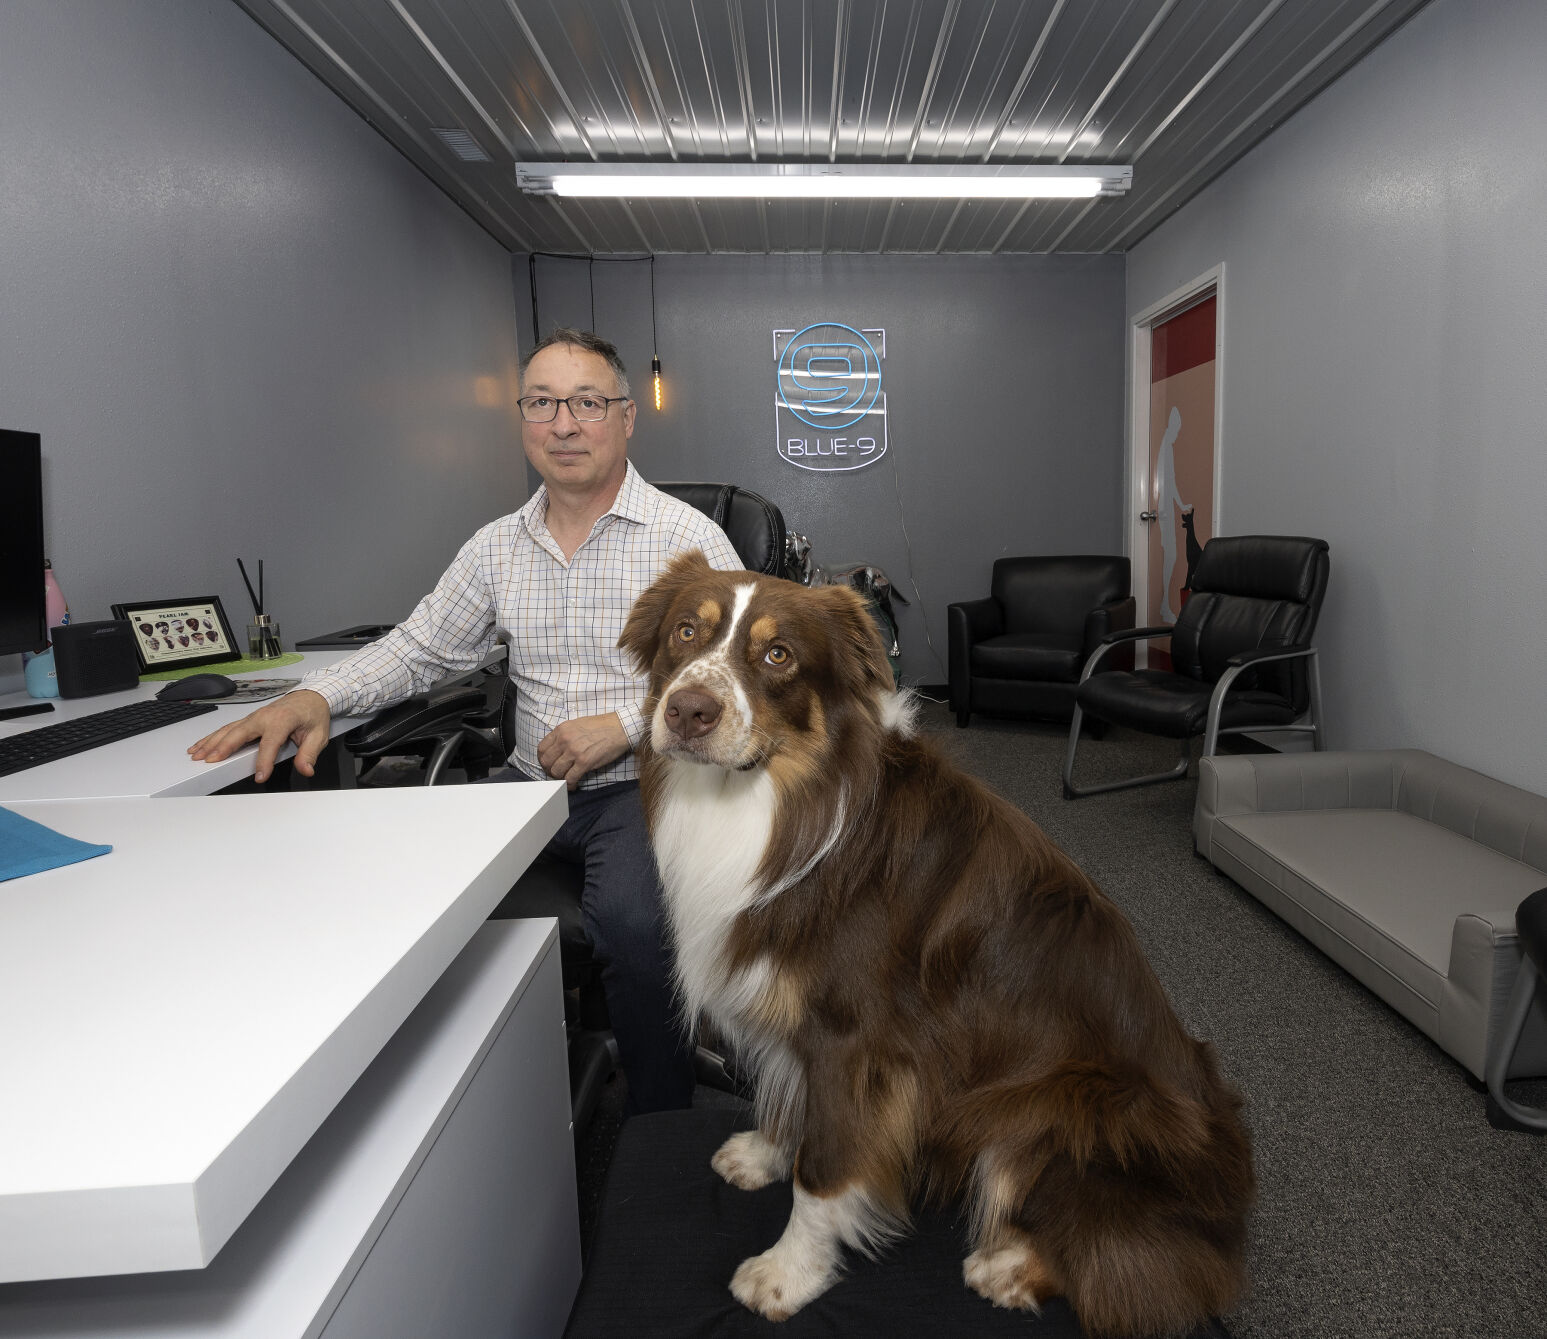 Blue-9 CEO David Blake and his dog, Cork, in the company’s lobby in Maquoketa, Iowa.    PHOTO CREDIT: Stephen Gassman
Telegraph Herald